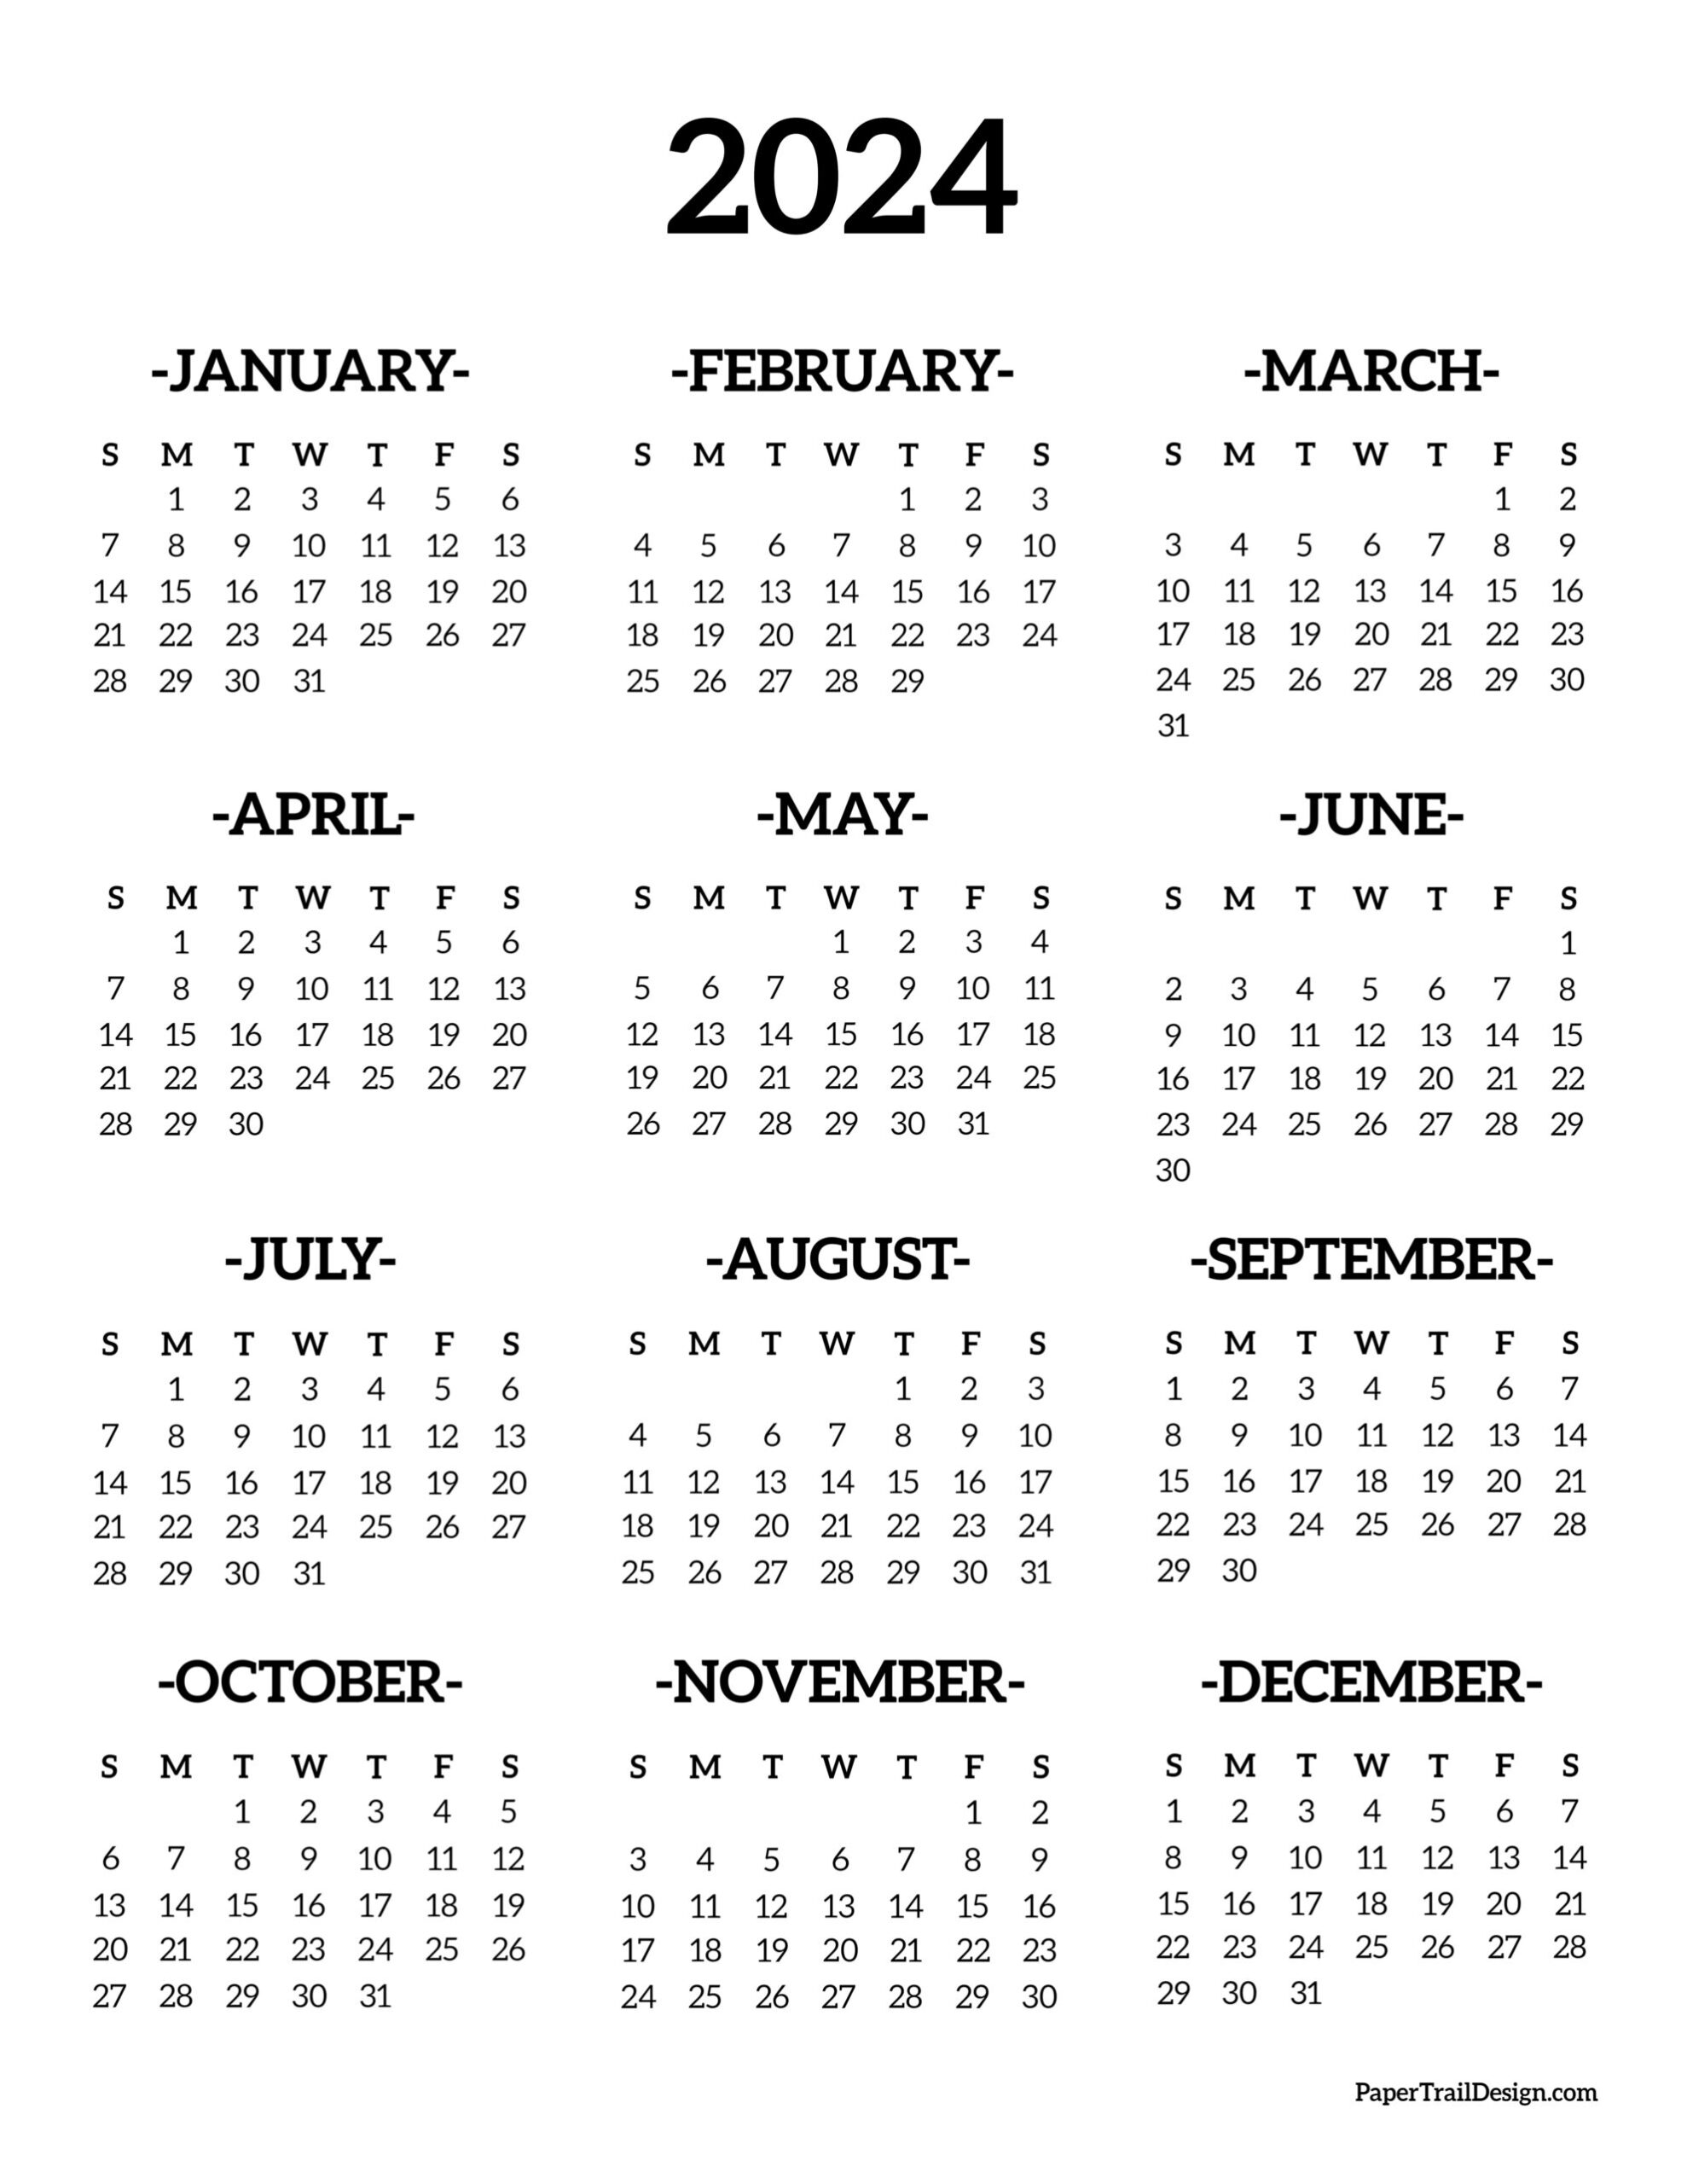 Calendar 2024 Printable One Page - Paper Trail Design for 2024 Free Calendar Printable